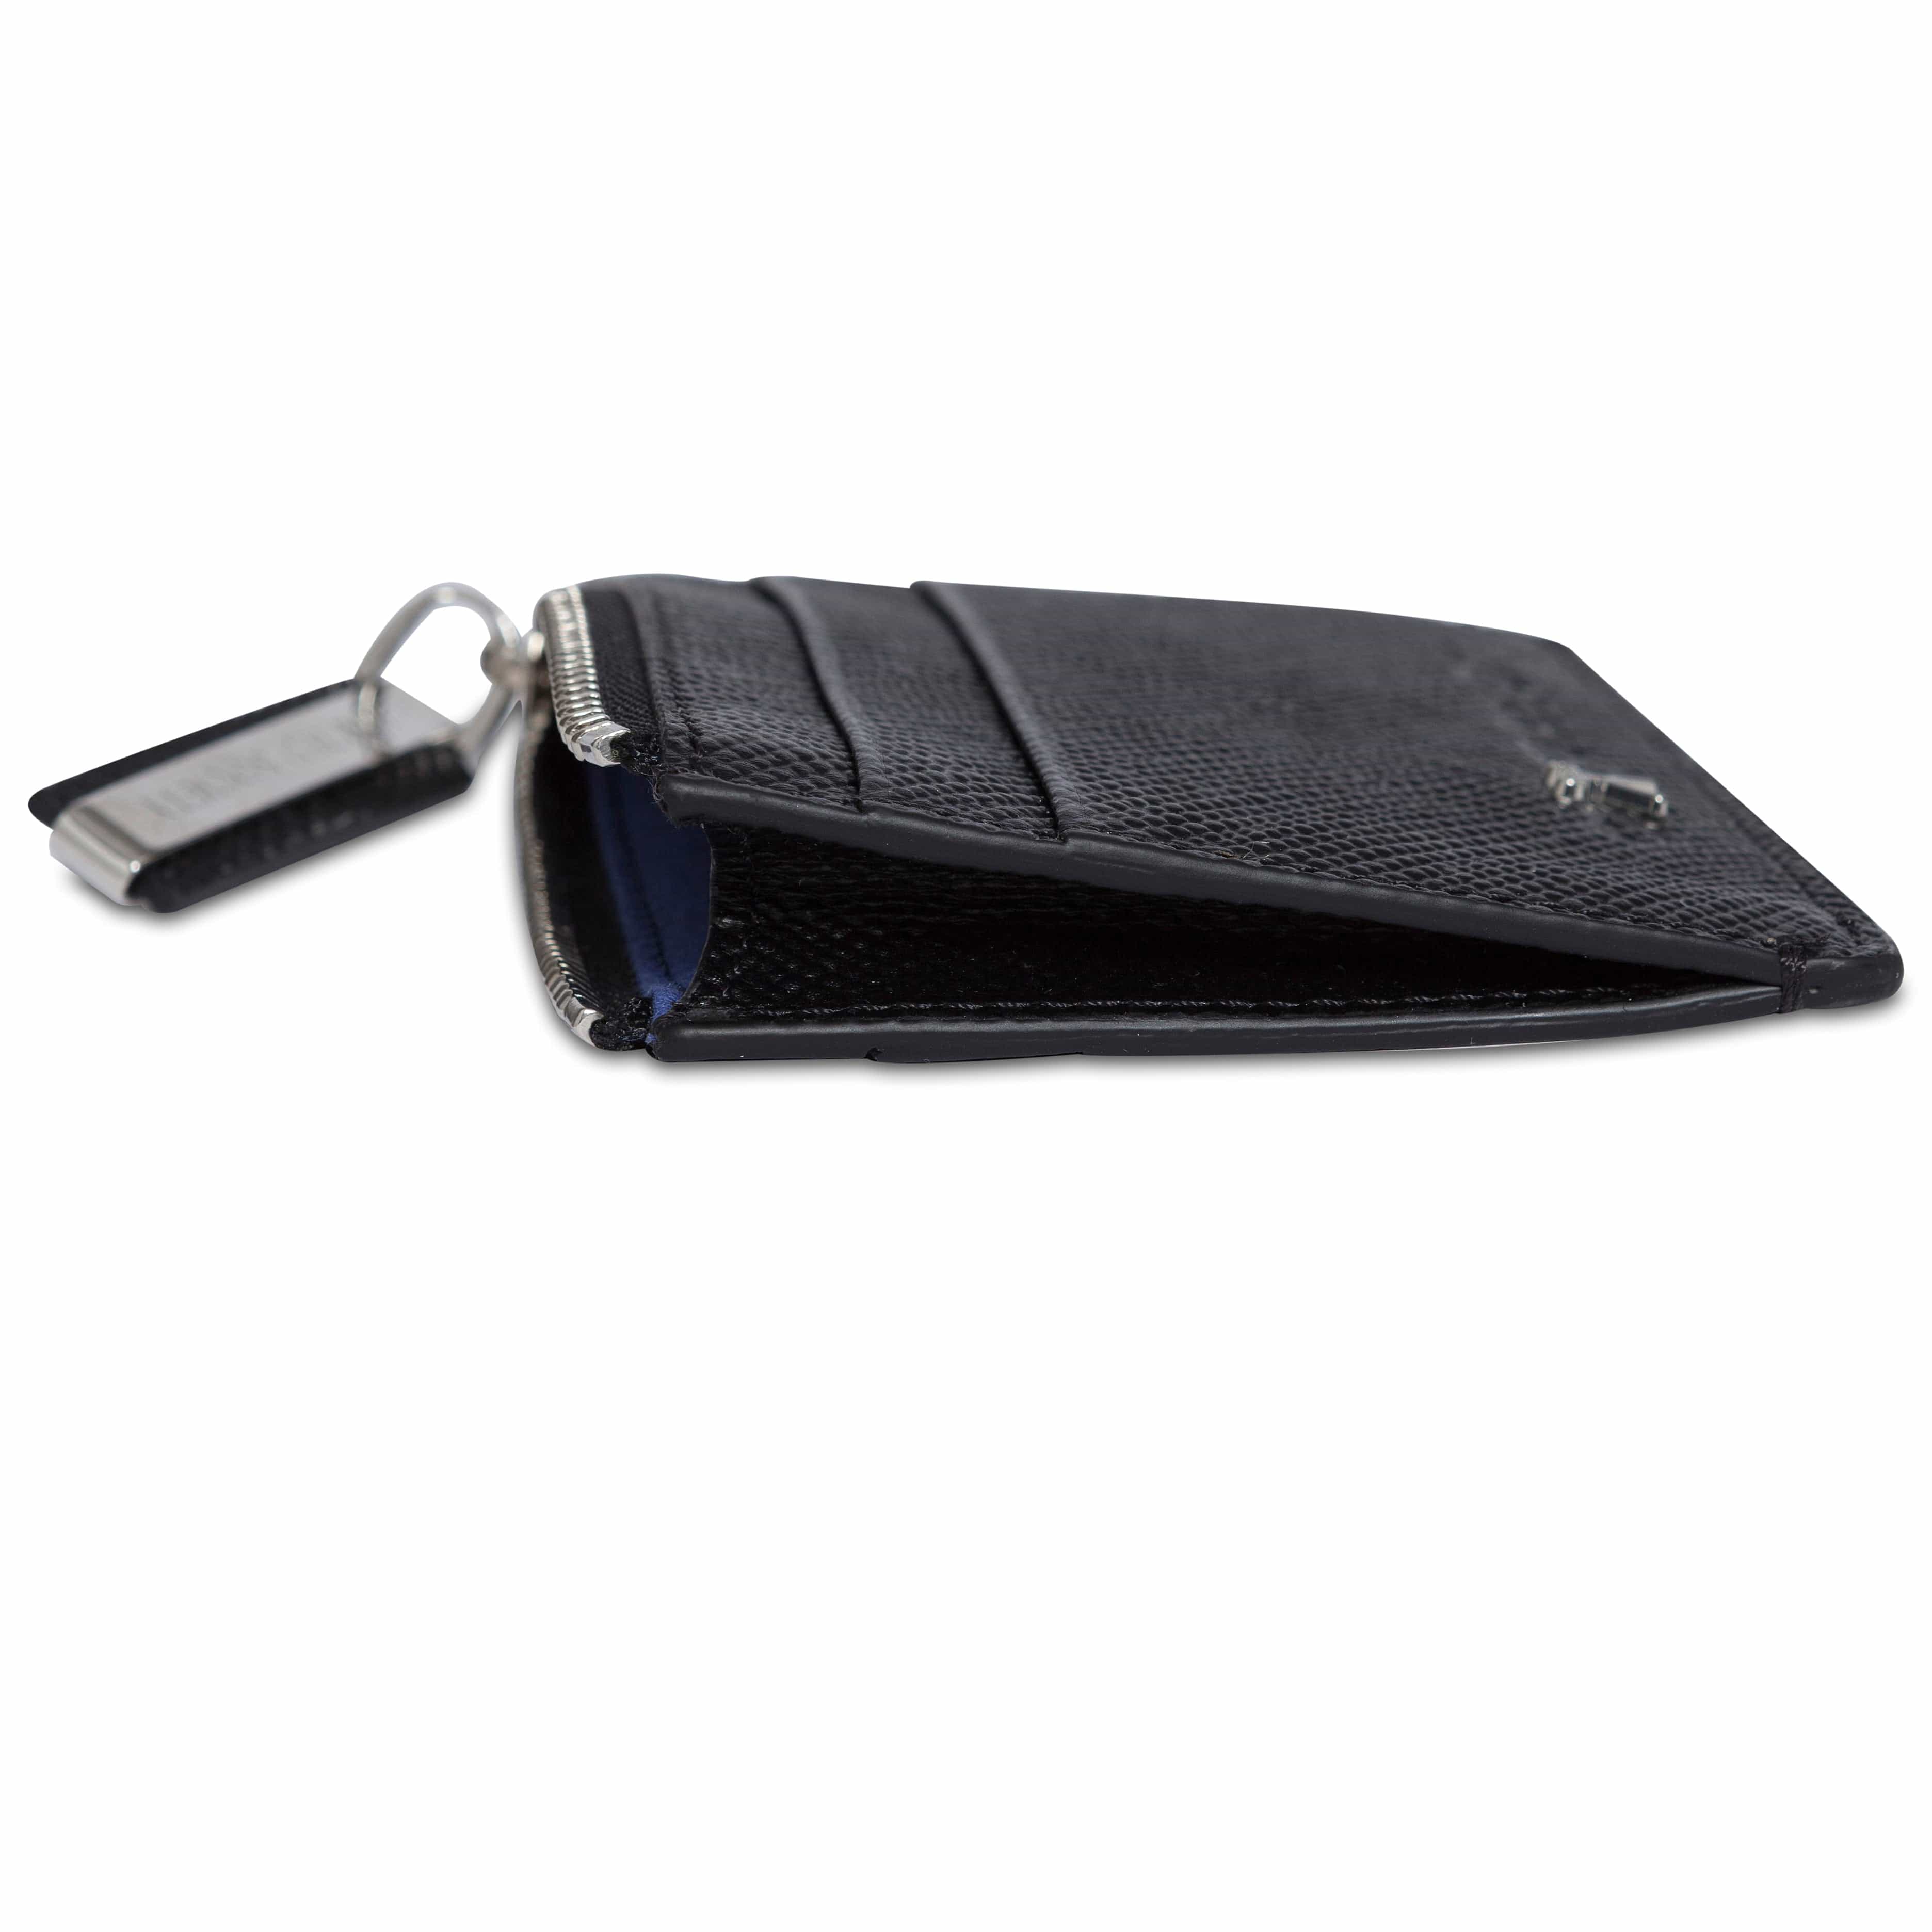 Sauro Leather Card Holder - Black Saffiano Leather -Side Image